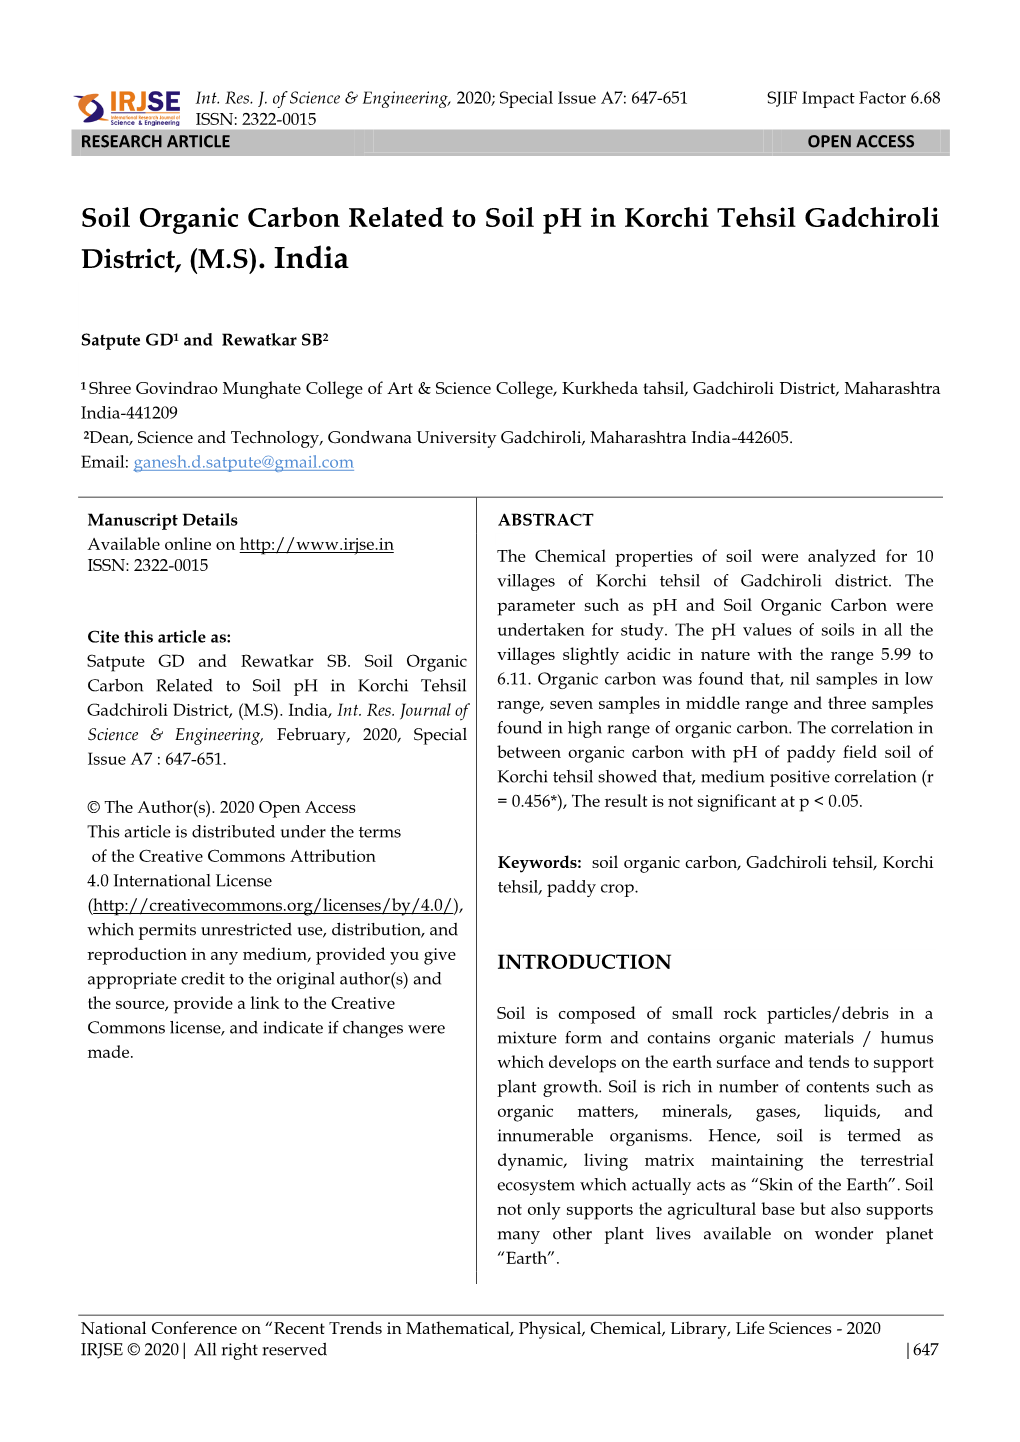 Soil Organic Carbon Related to Soil Ph in Korchi Tehsil Gadchiroli District, (M.S)